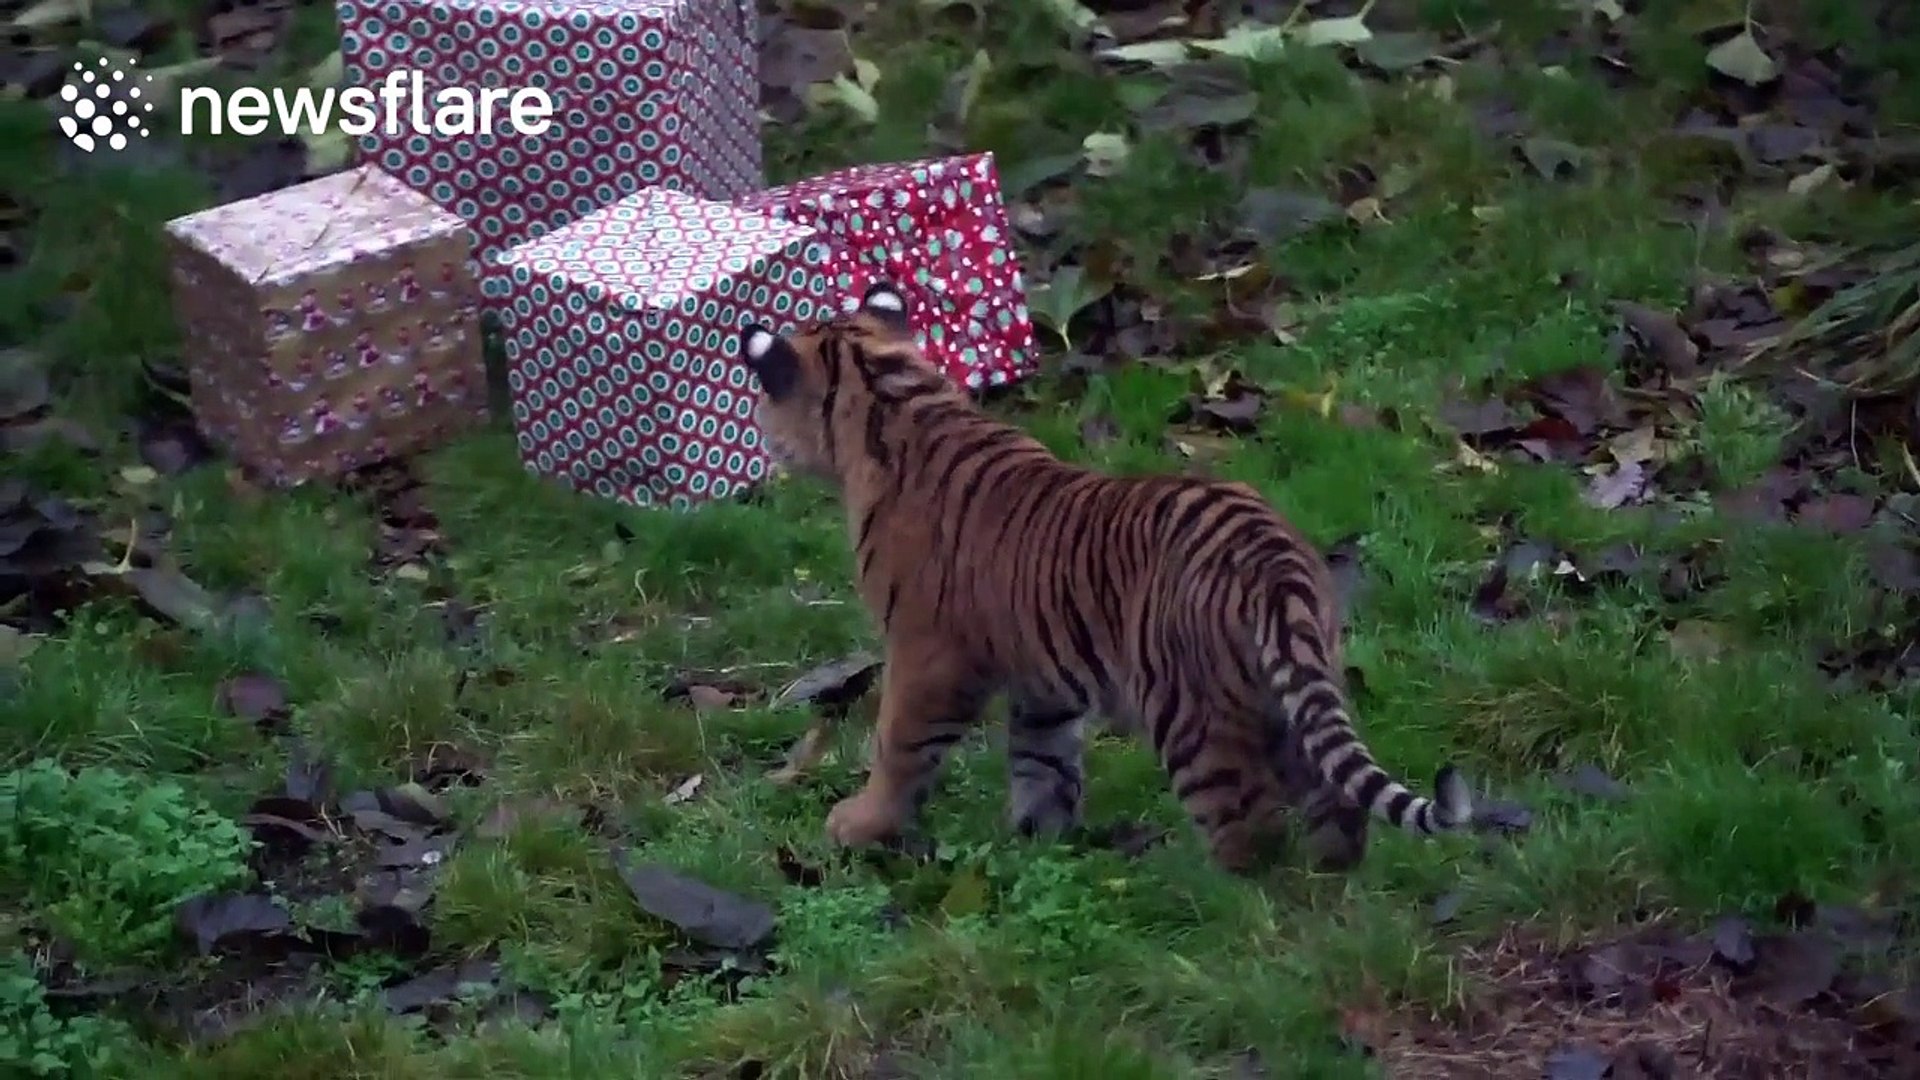 Tigers and meerkats enjoy Christmas treats at London Zoo